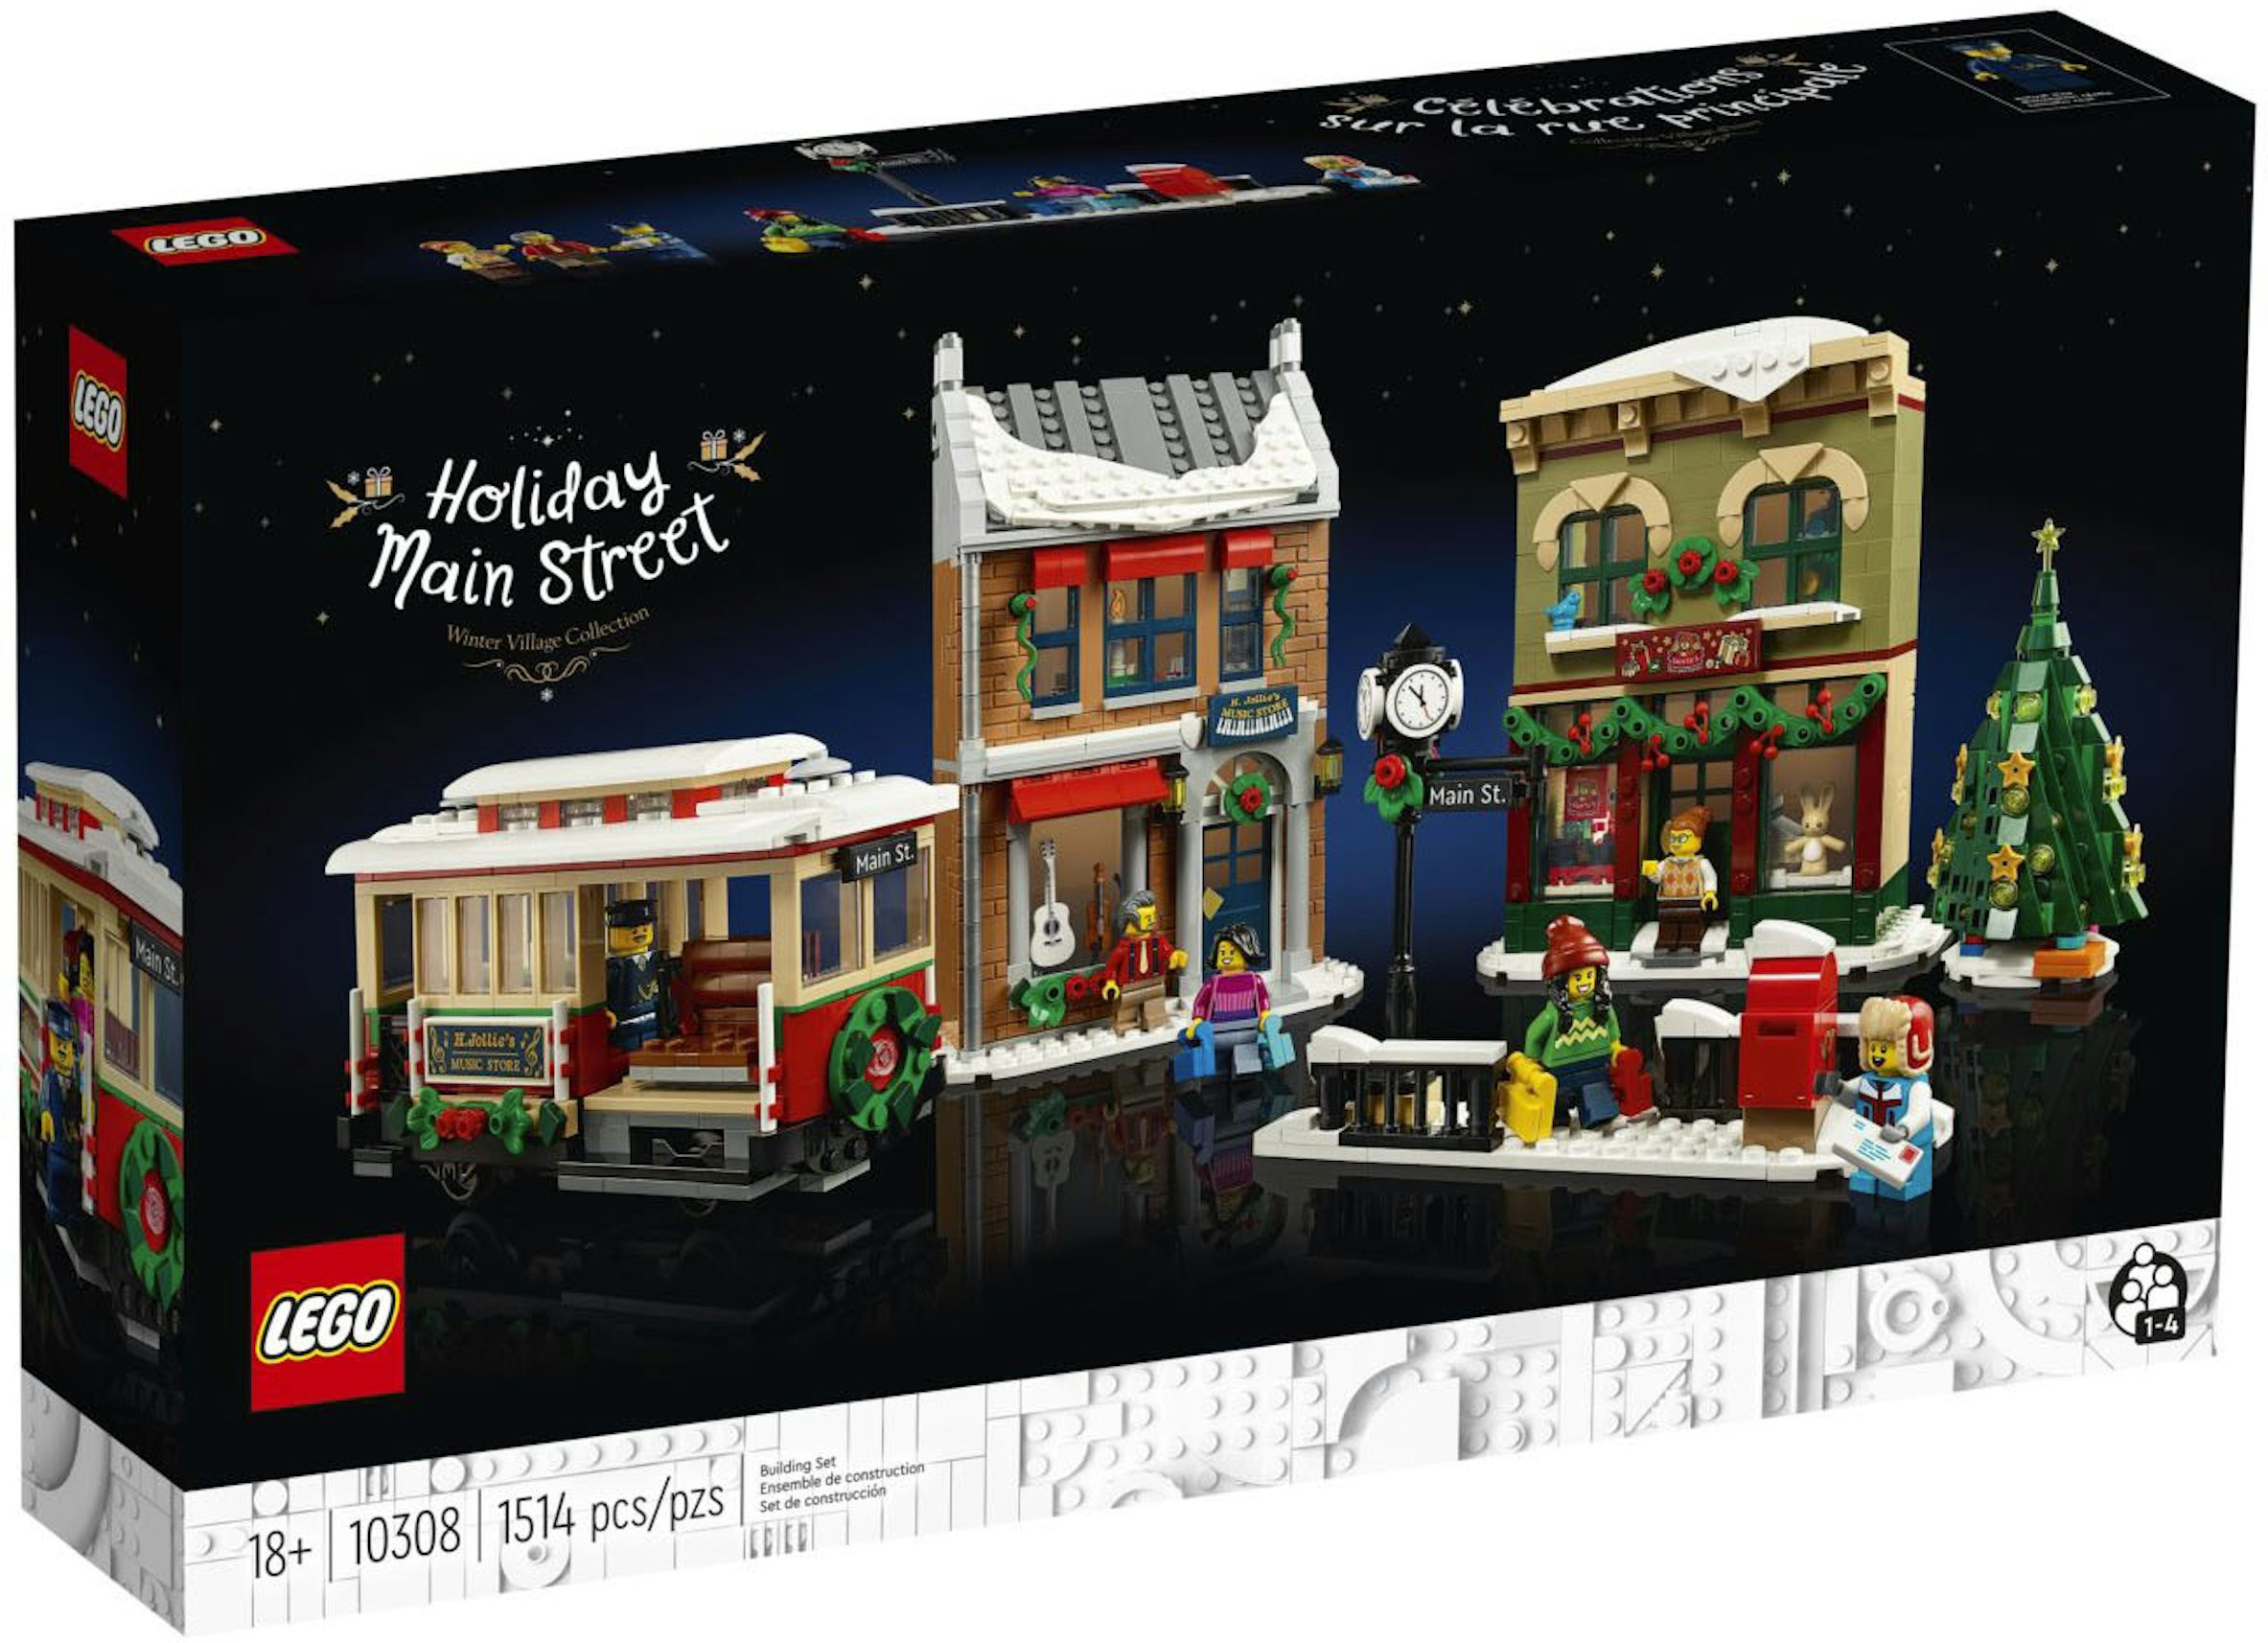 LEGO Winter Village Holiday Main Street Set 10308 - US